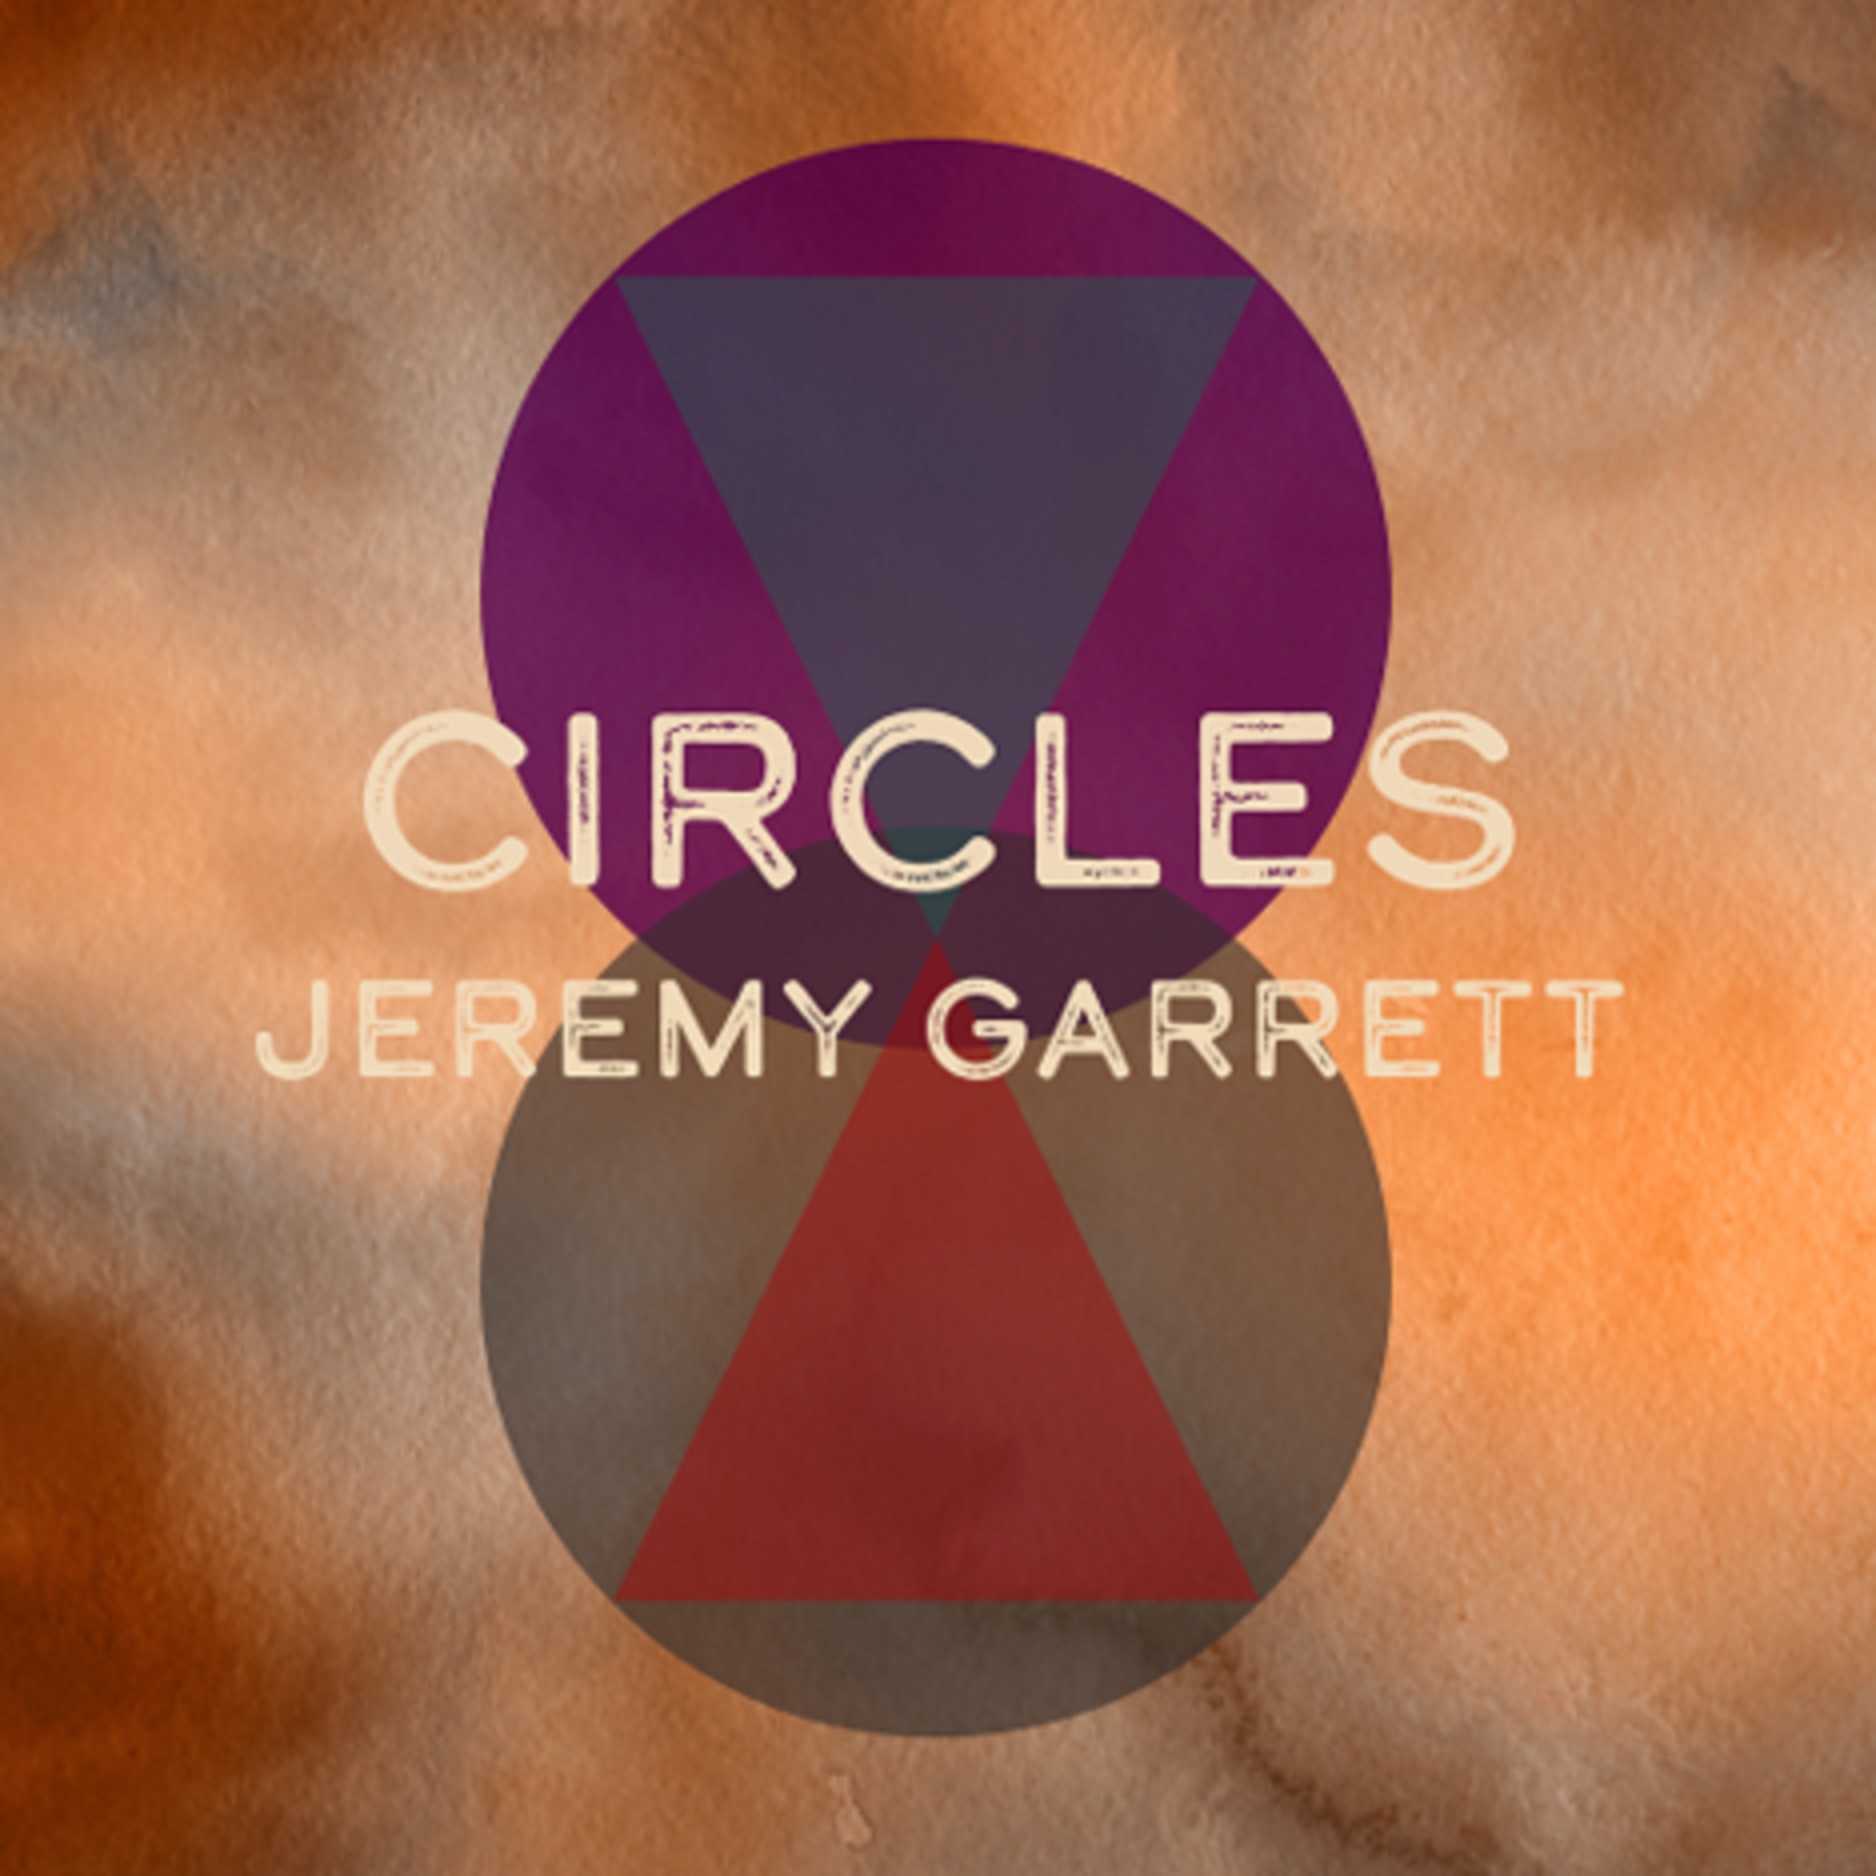 Jeremy Garrett set to release "Circles" January 31st